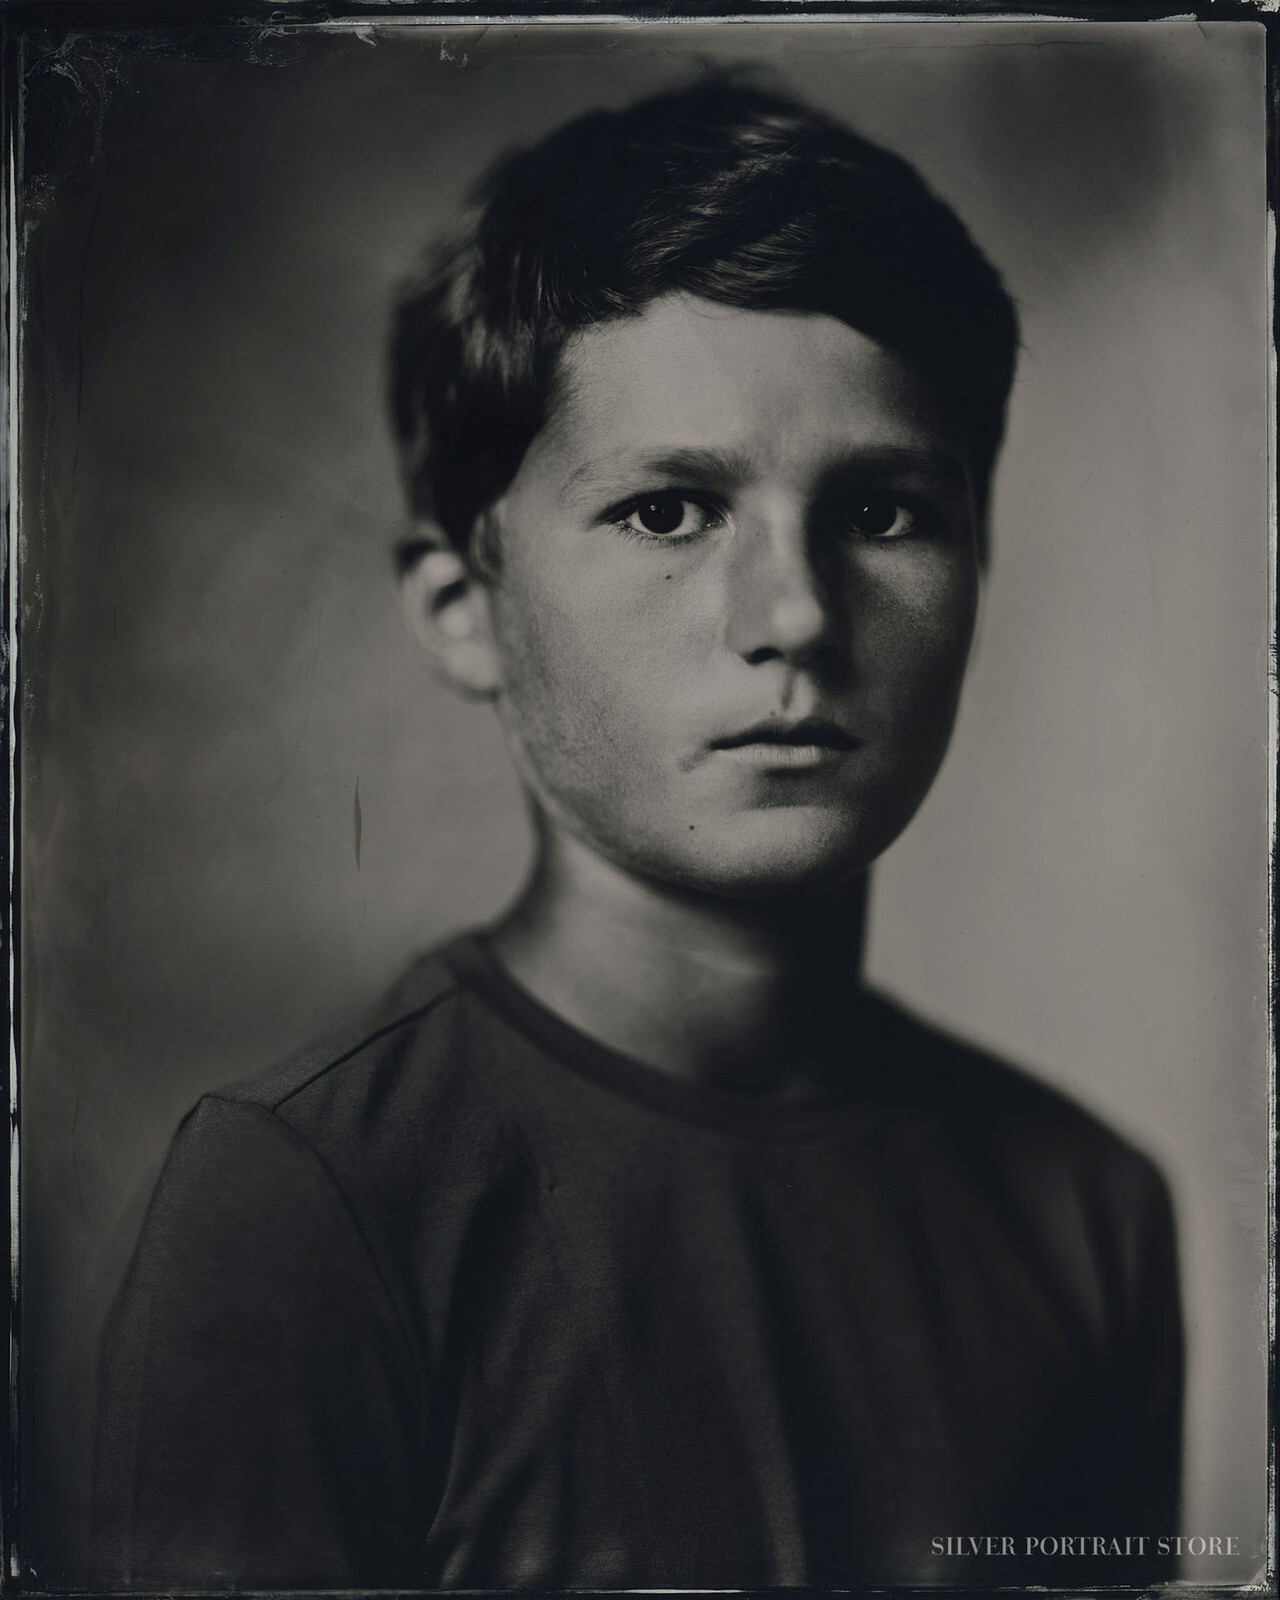 Merijn-Silver Portrait Store-scan from Wet plate collodion-Tintype 20 x 25 cm.